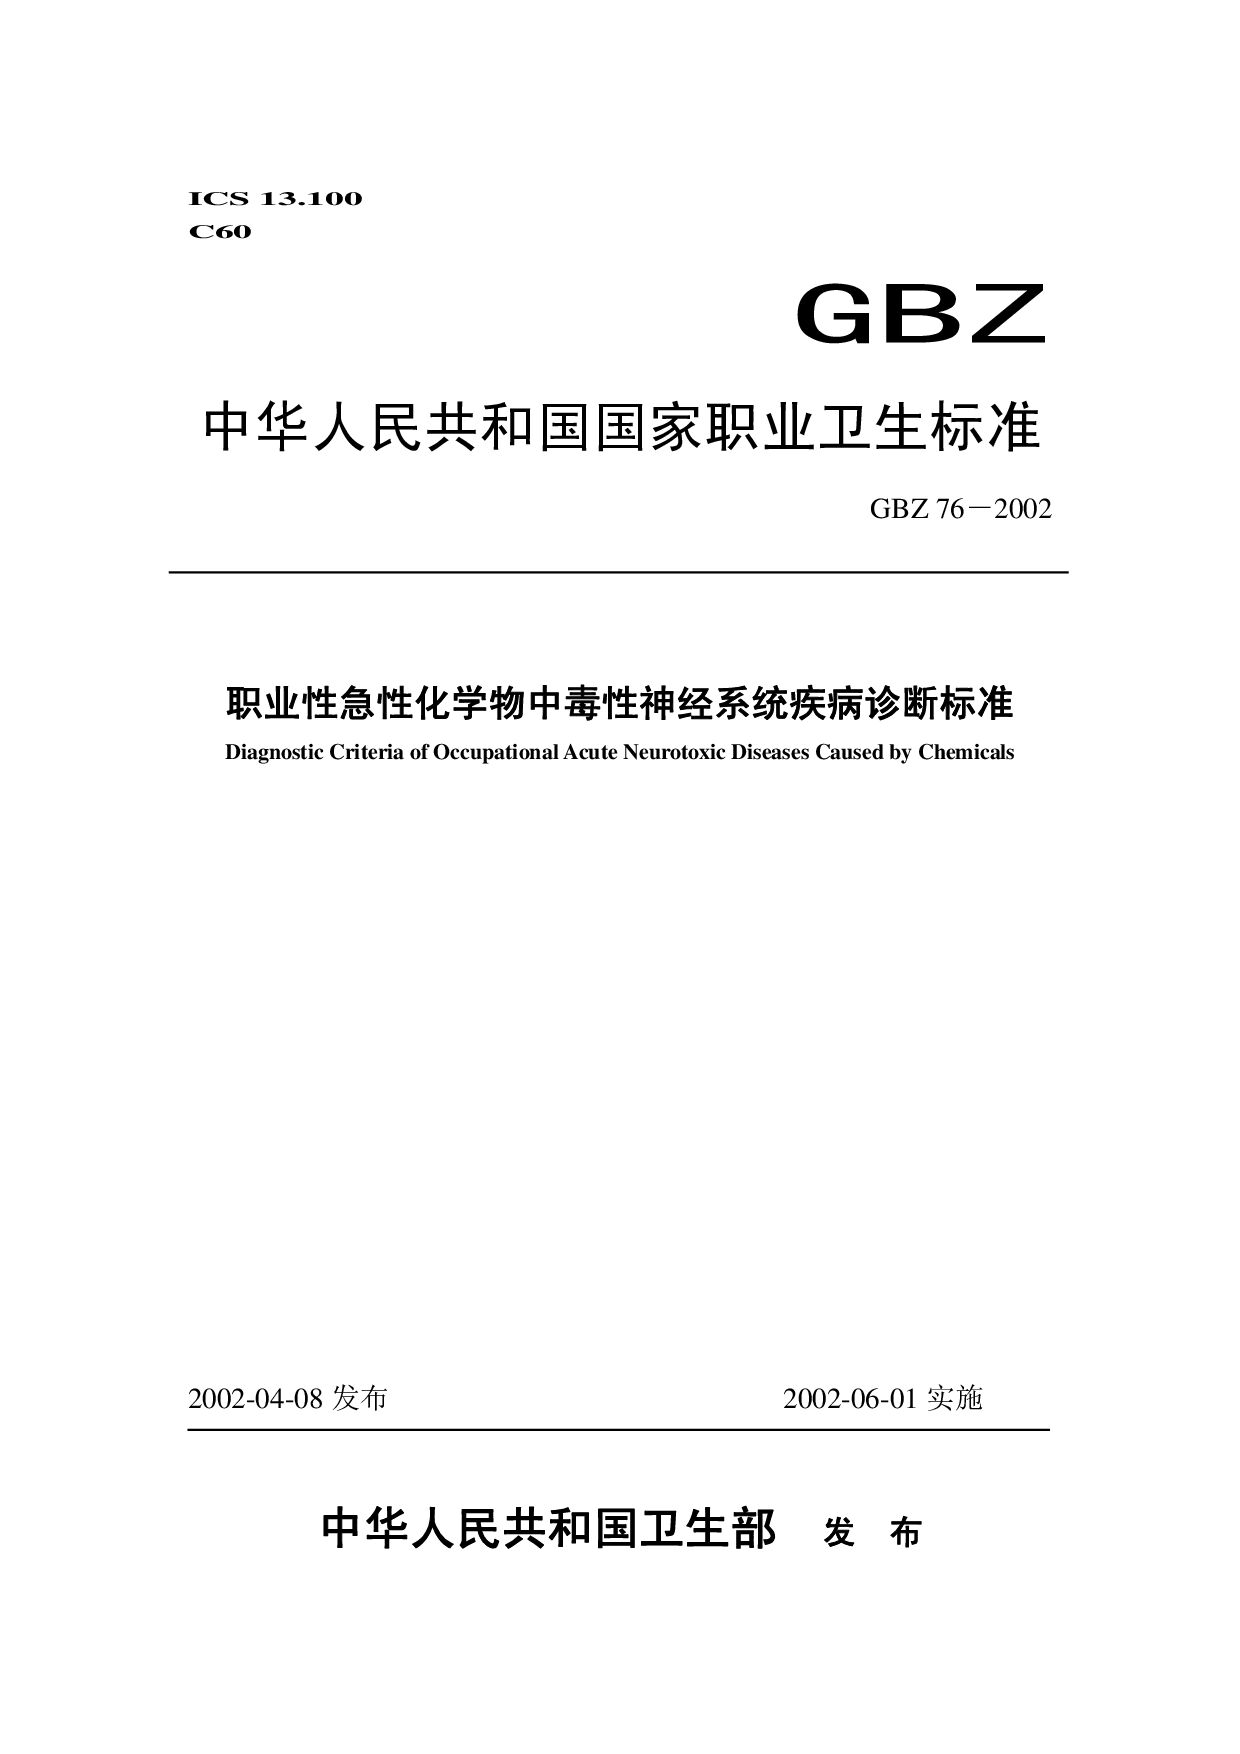 GBZ 76-2002封面图